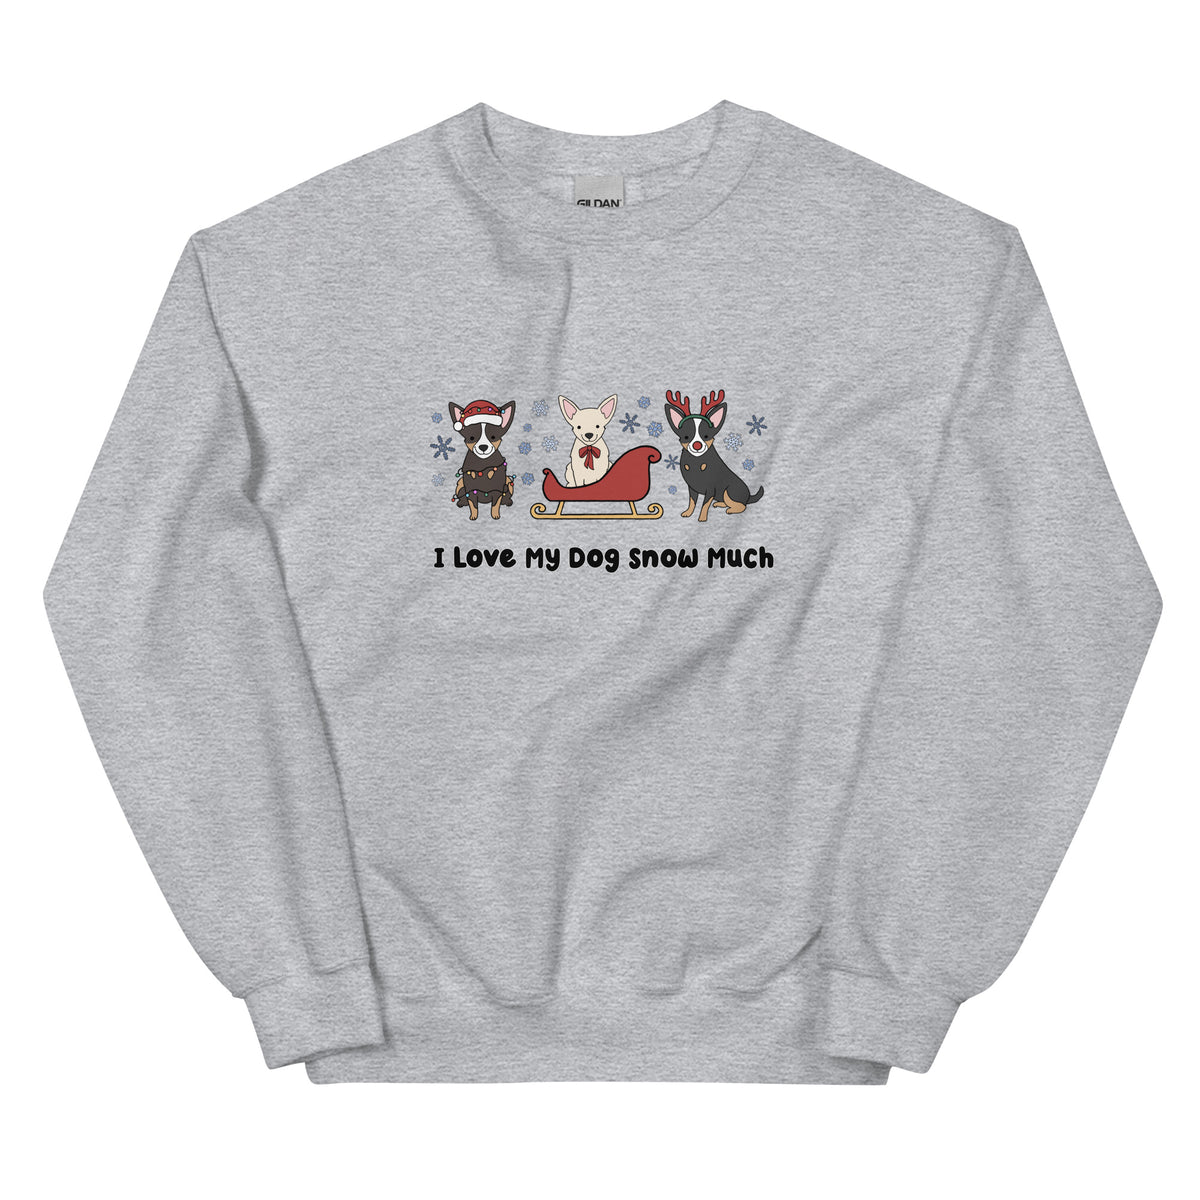 Sweatshirt - I Love My Dog Snow Much (Chihuahuas)